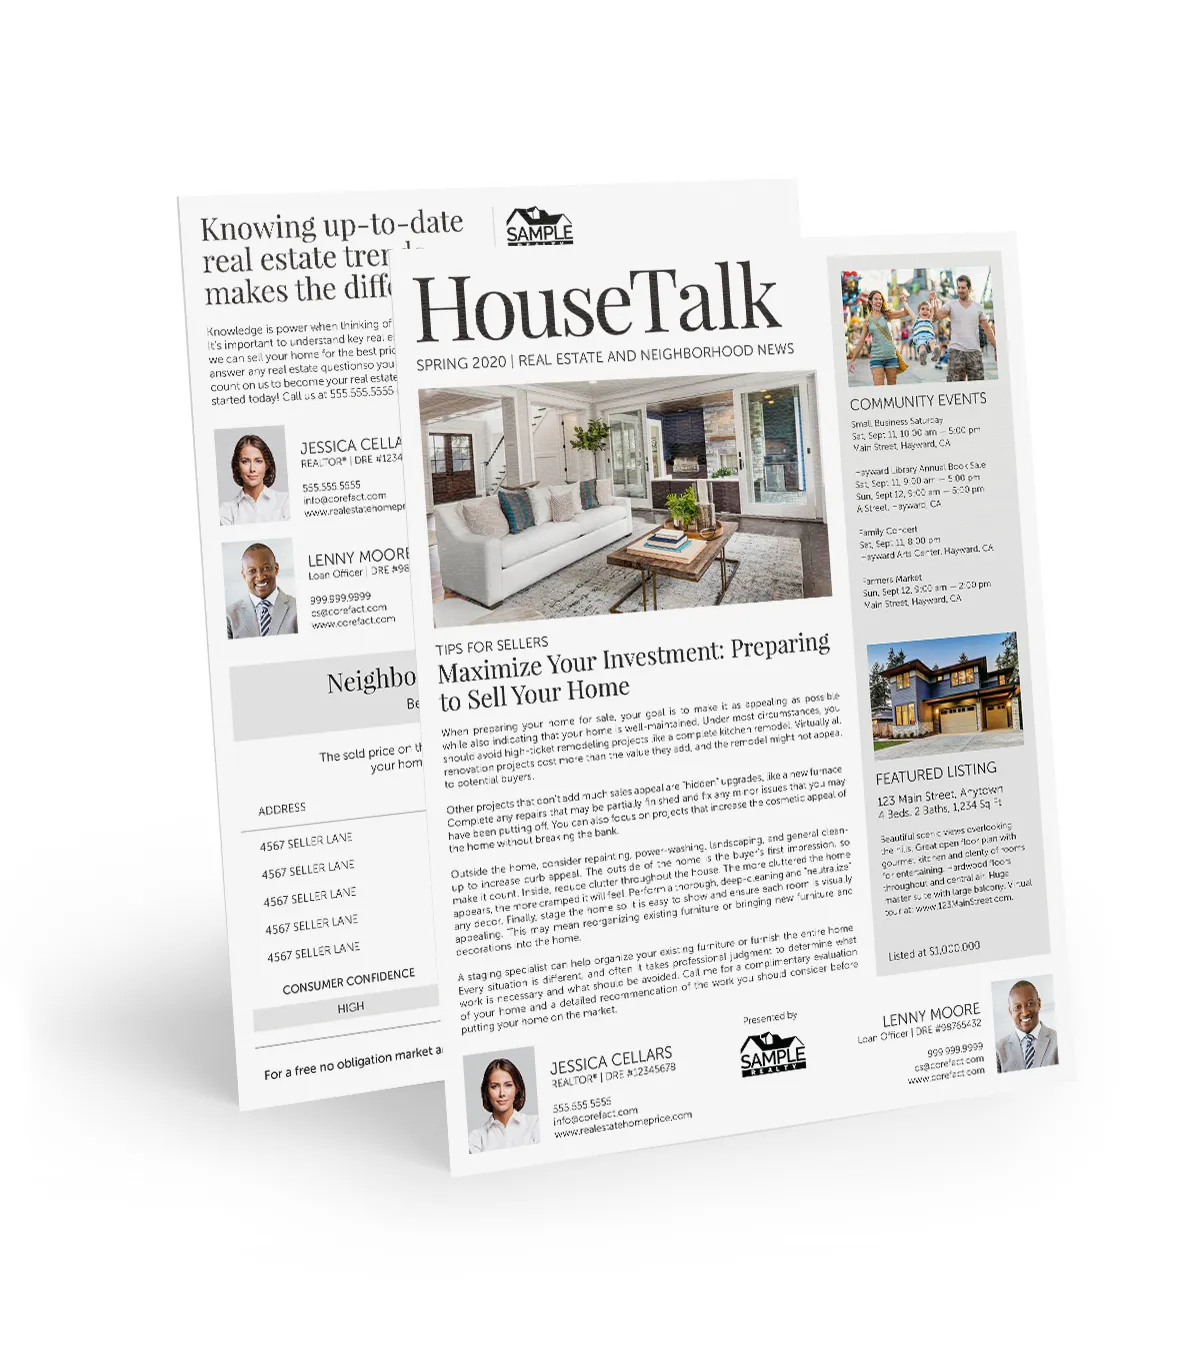 House Talk Newsletter - Preparing Your Home (Team)